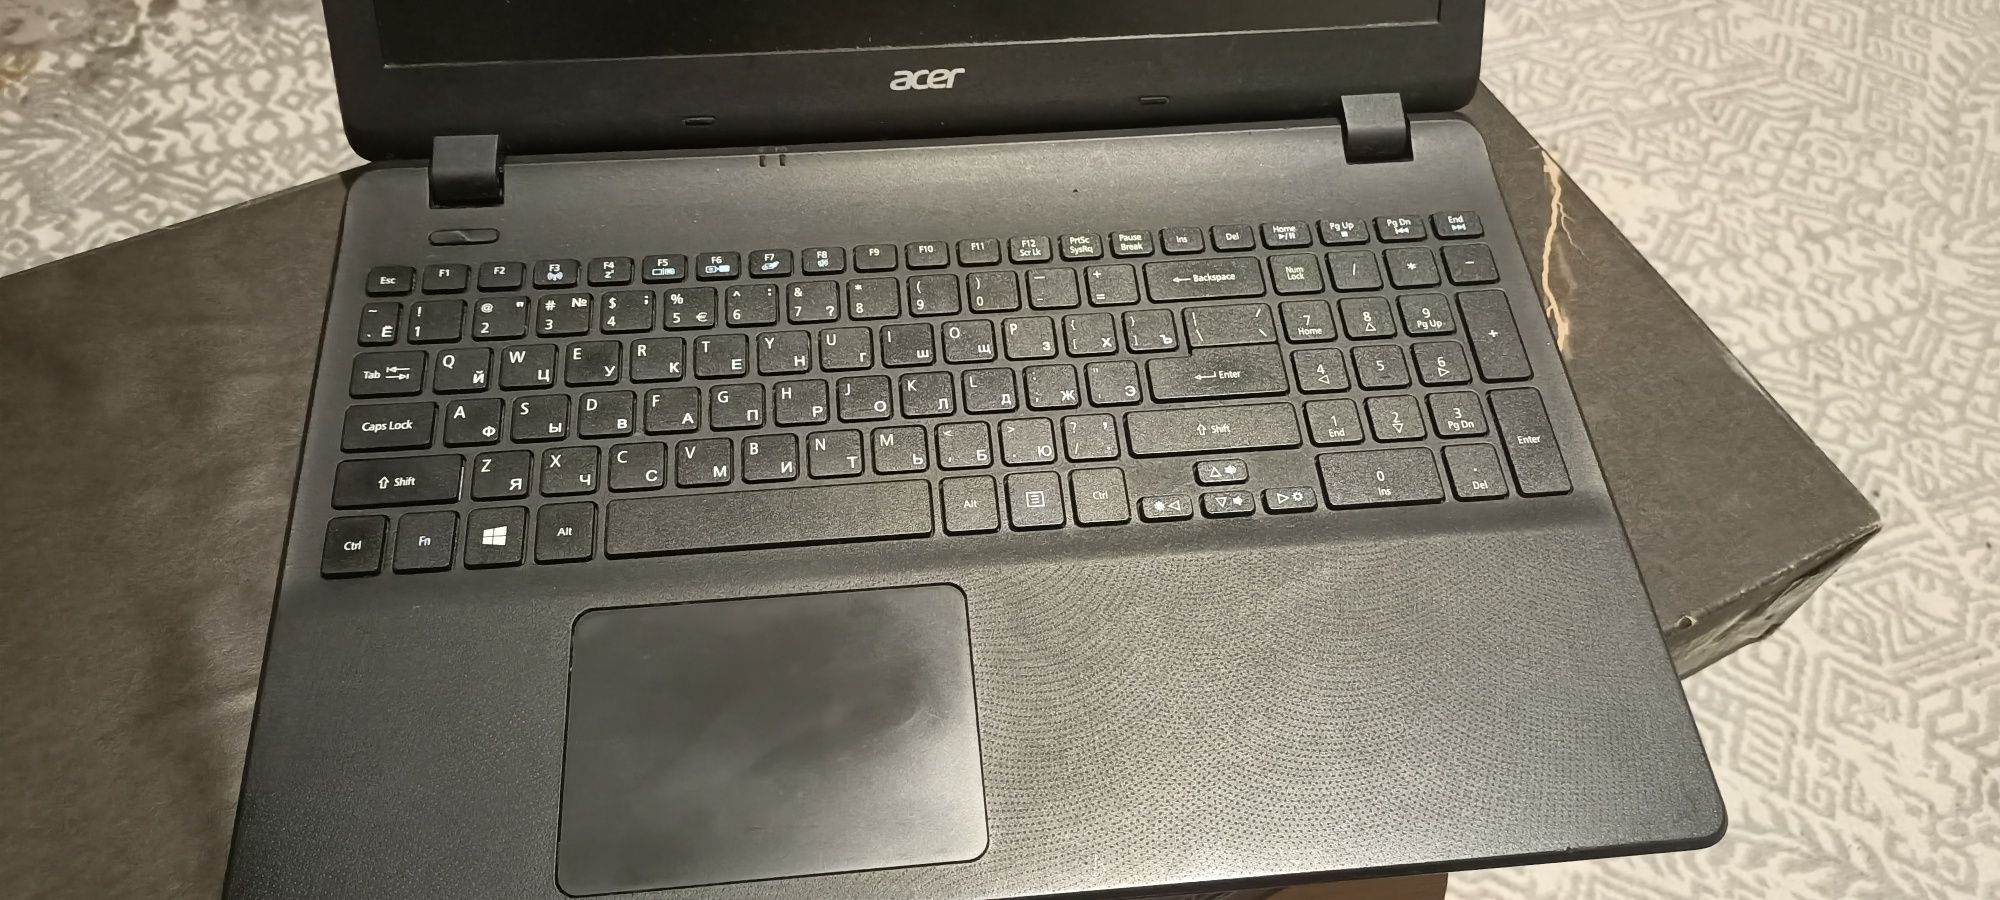 Ноутбук Acer Extensa, срочно